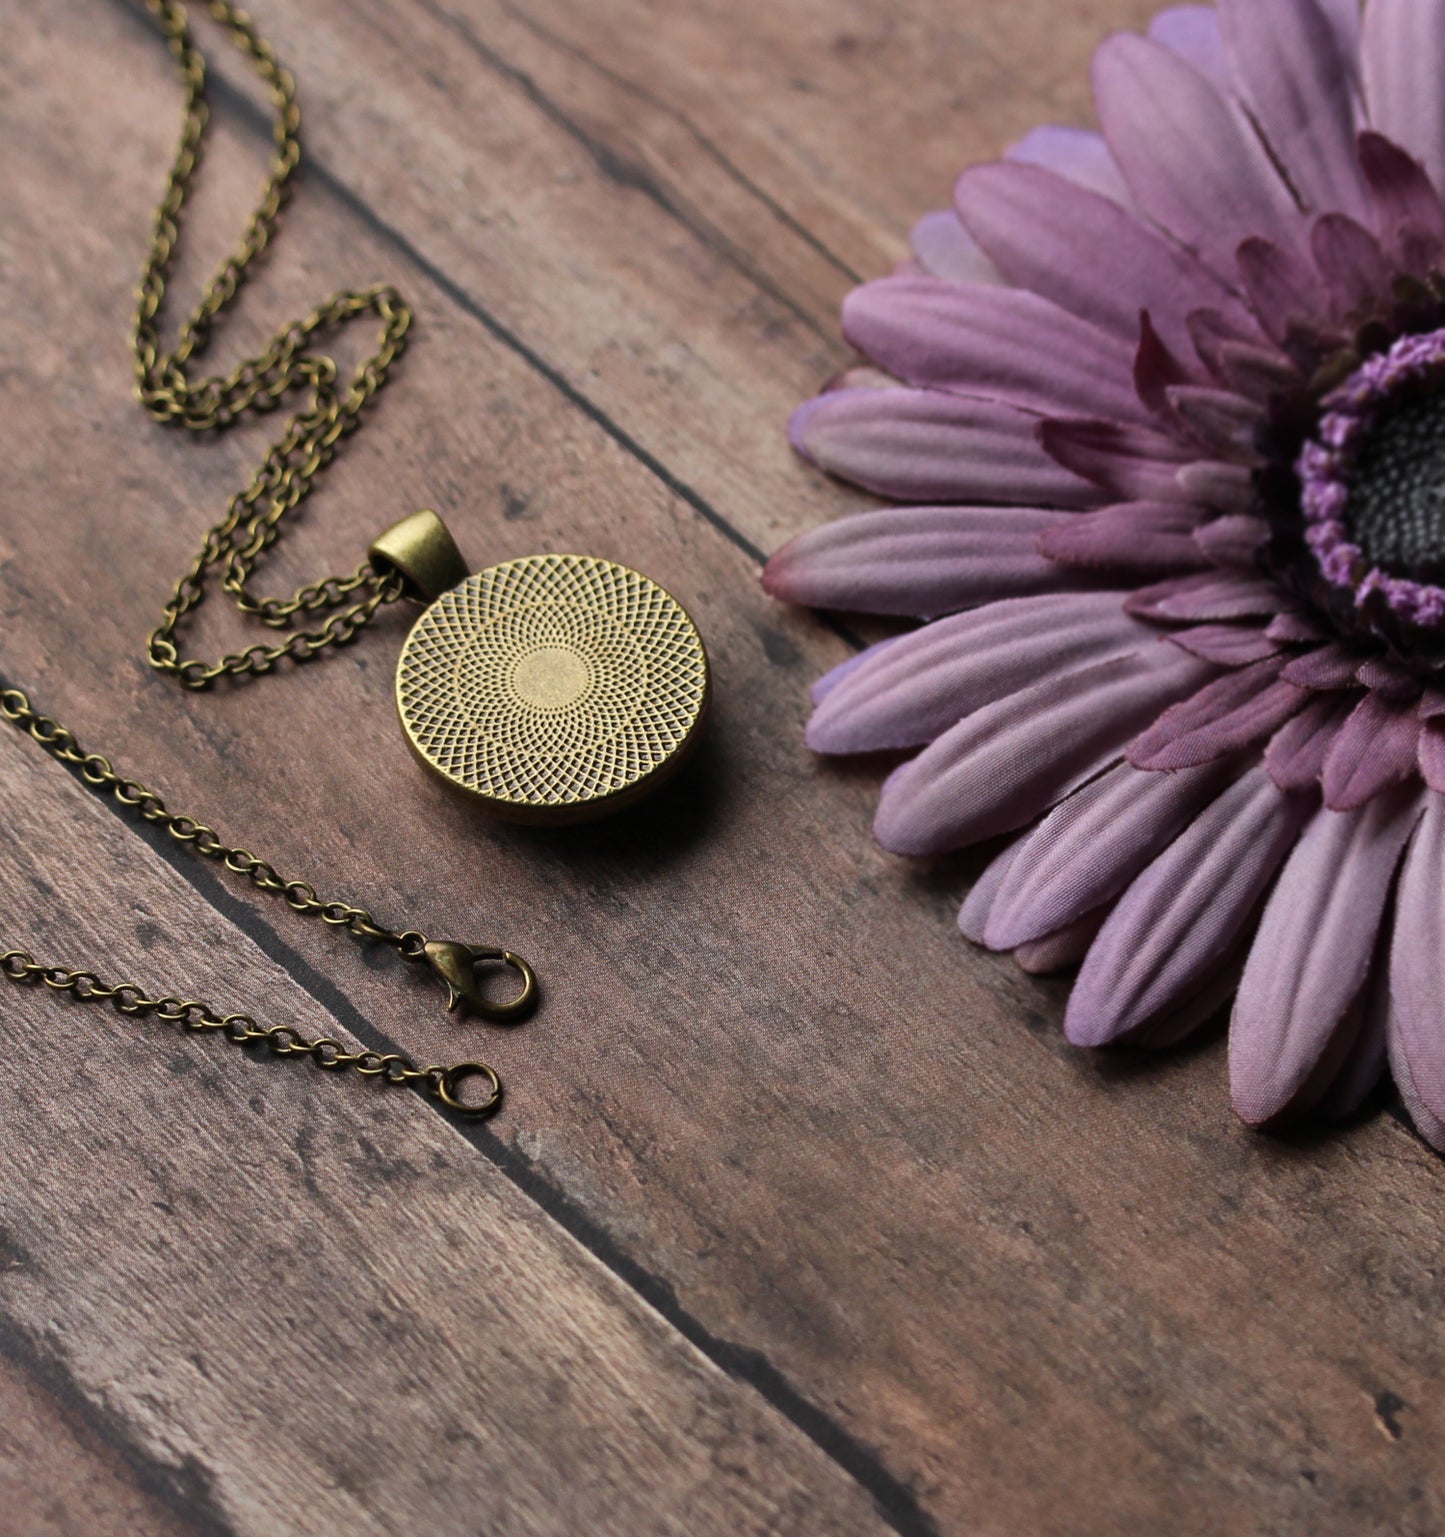 Honey Bee Necklace, Small Pendant